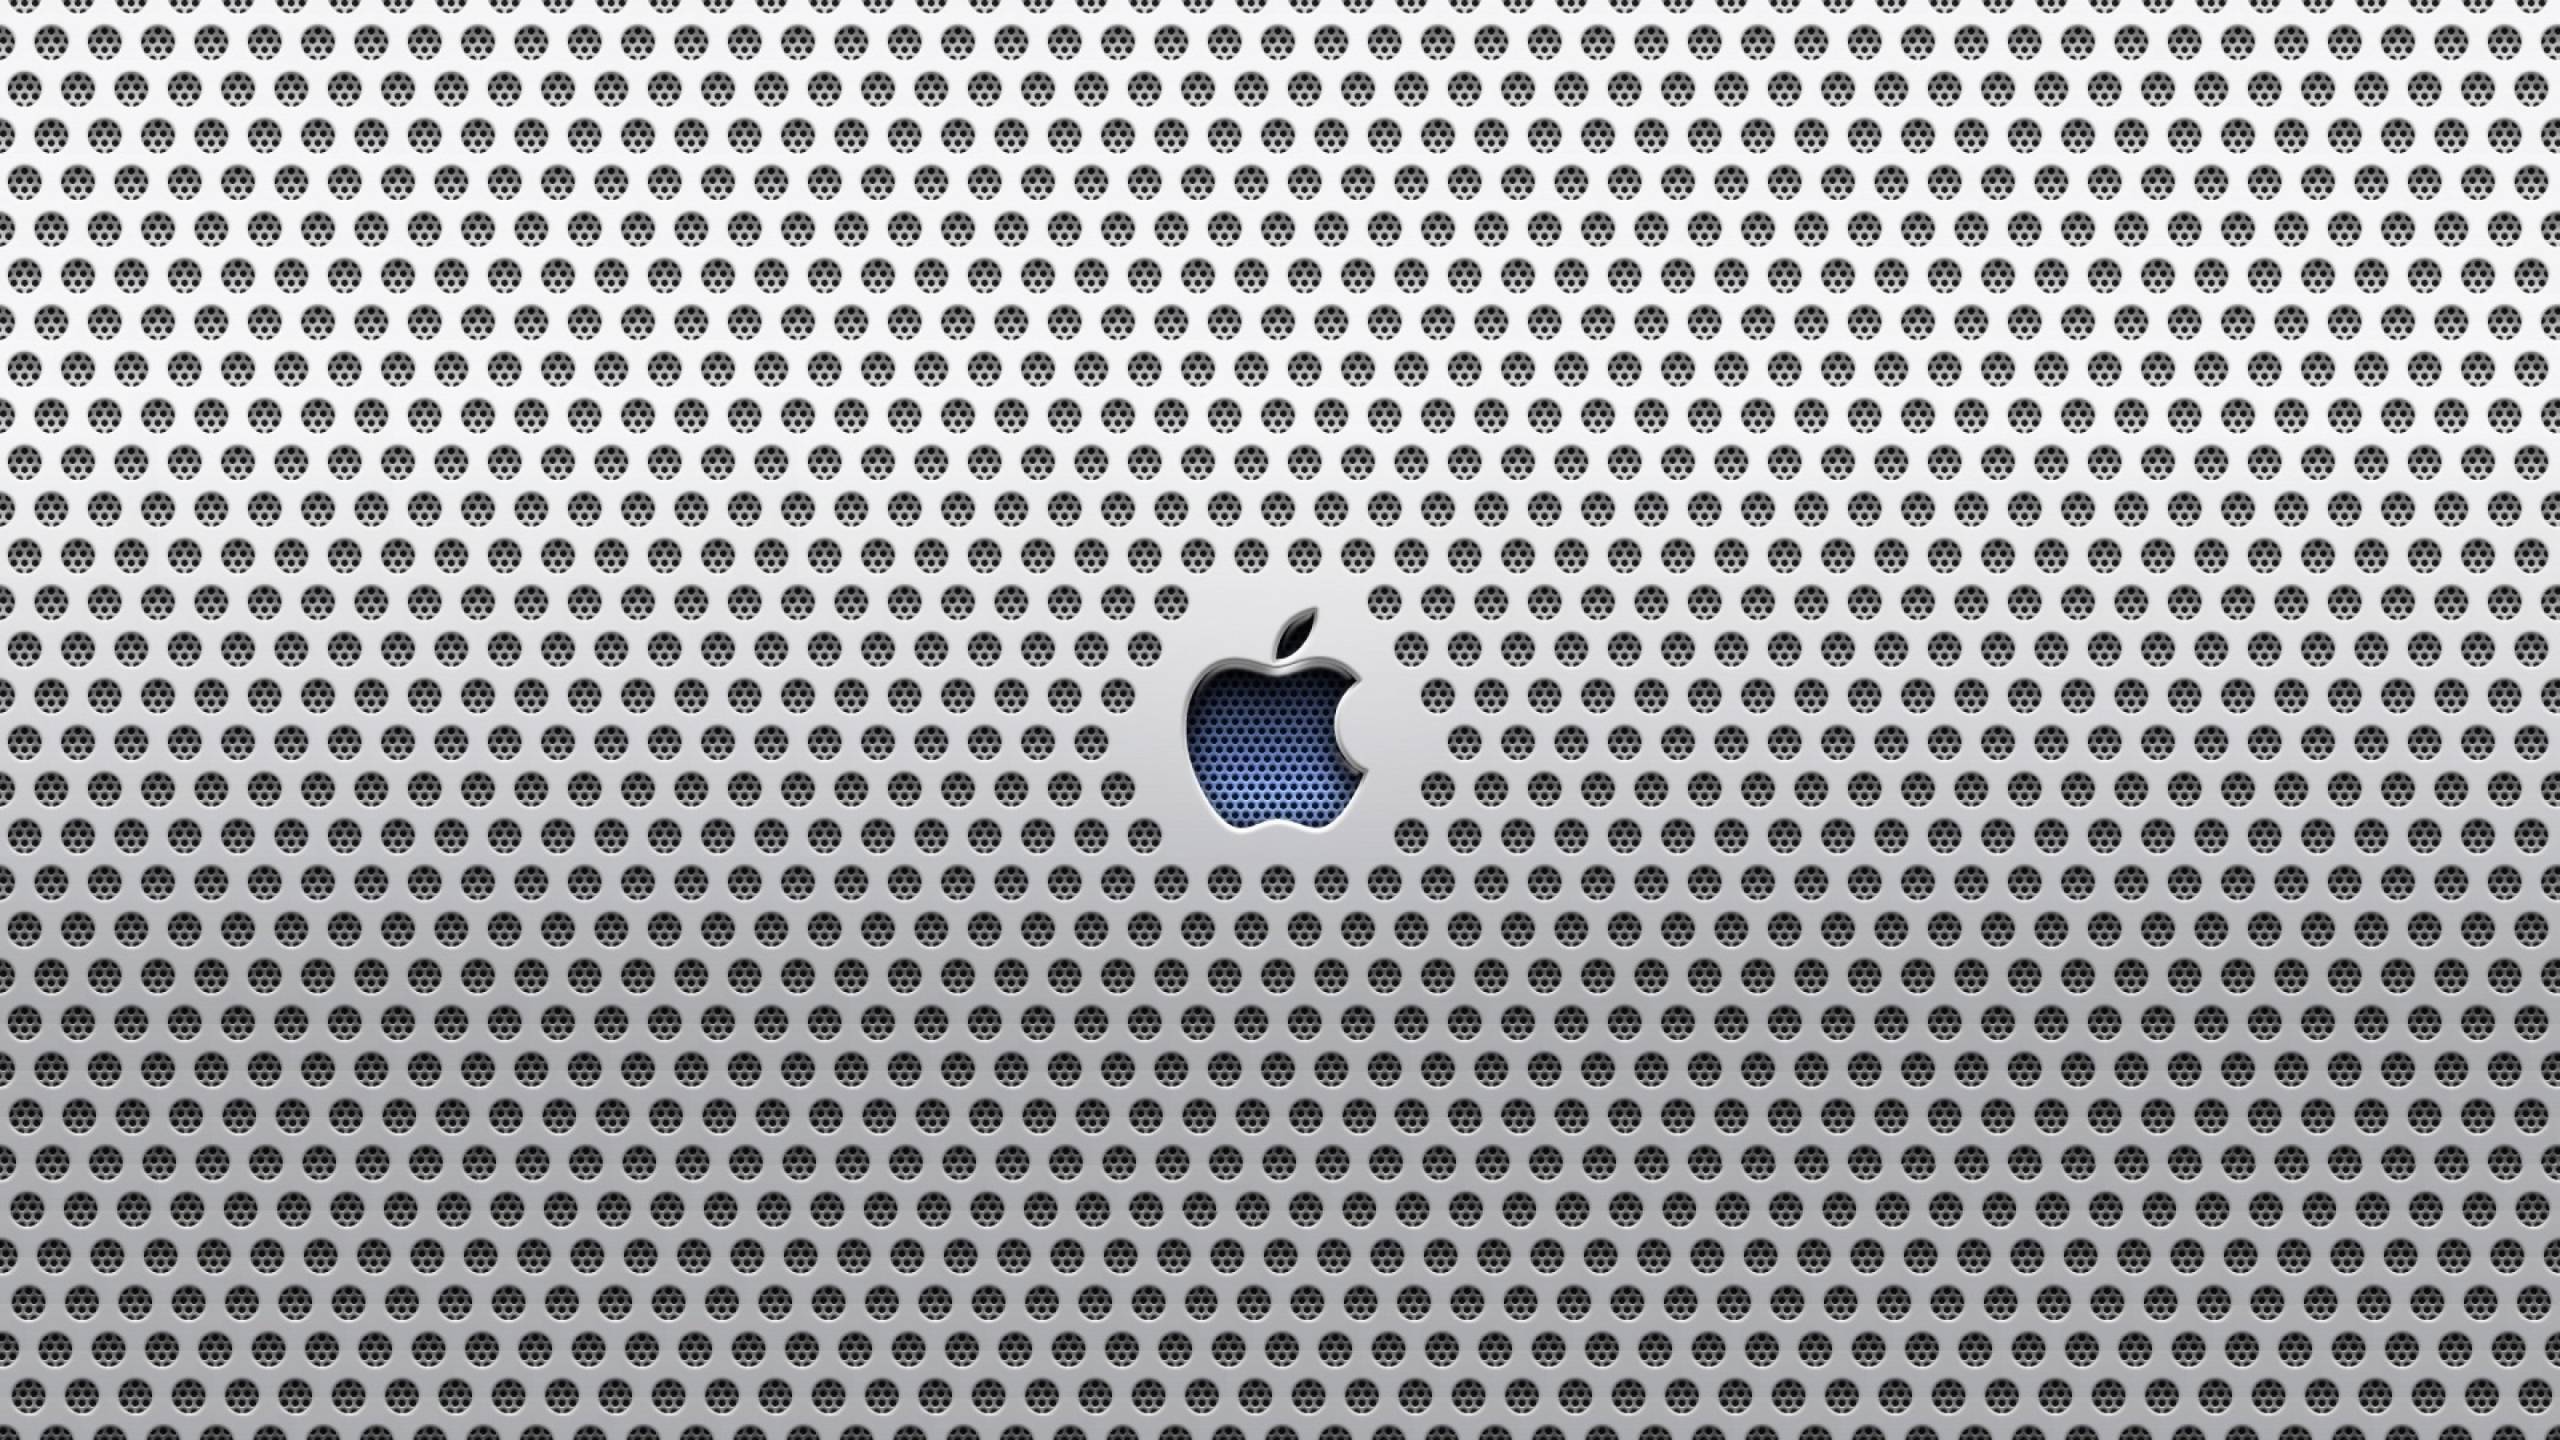 Apple Metal HD Mac Wallpaper Download. Free Mac Wallpaper Download